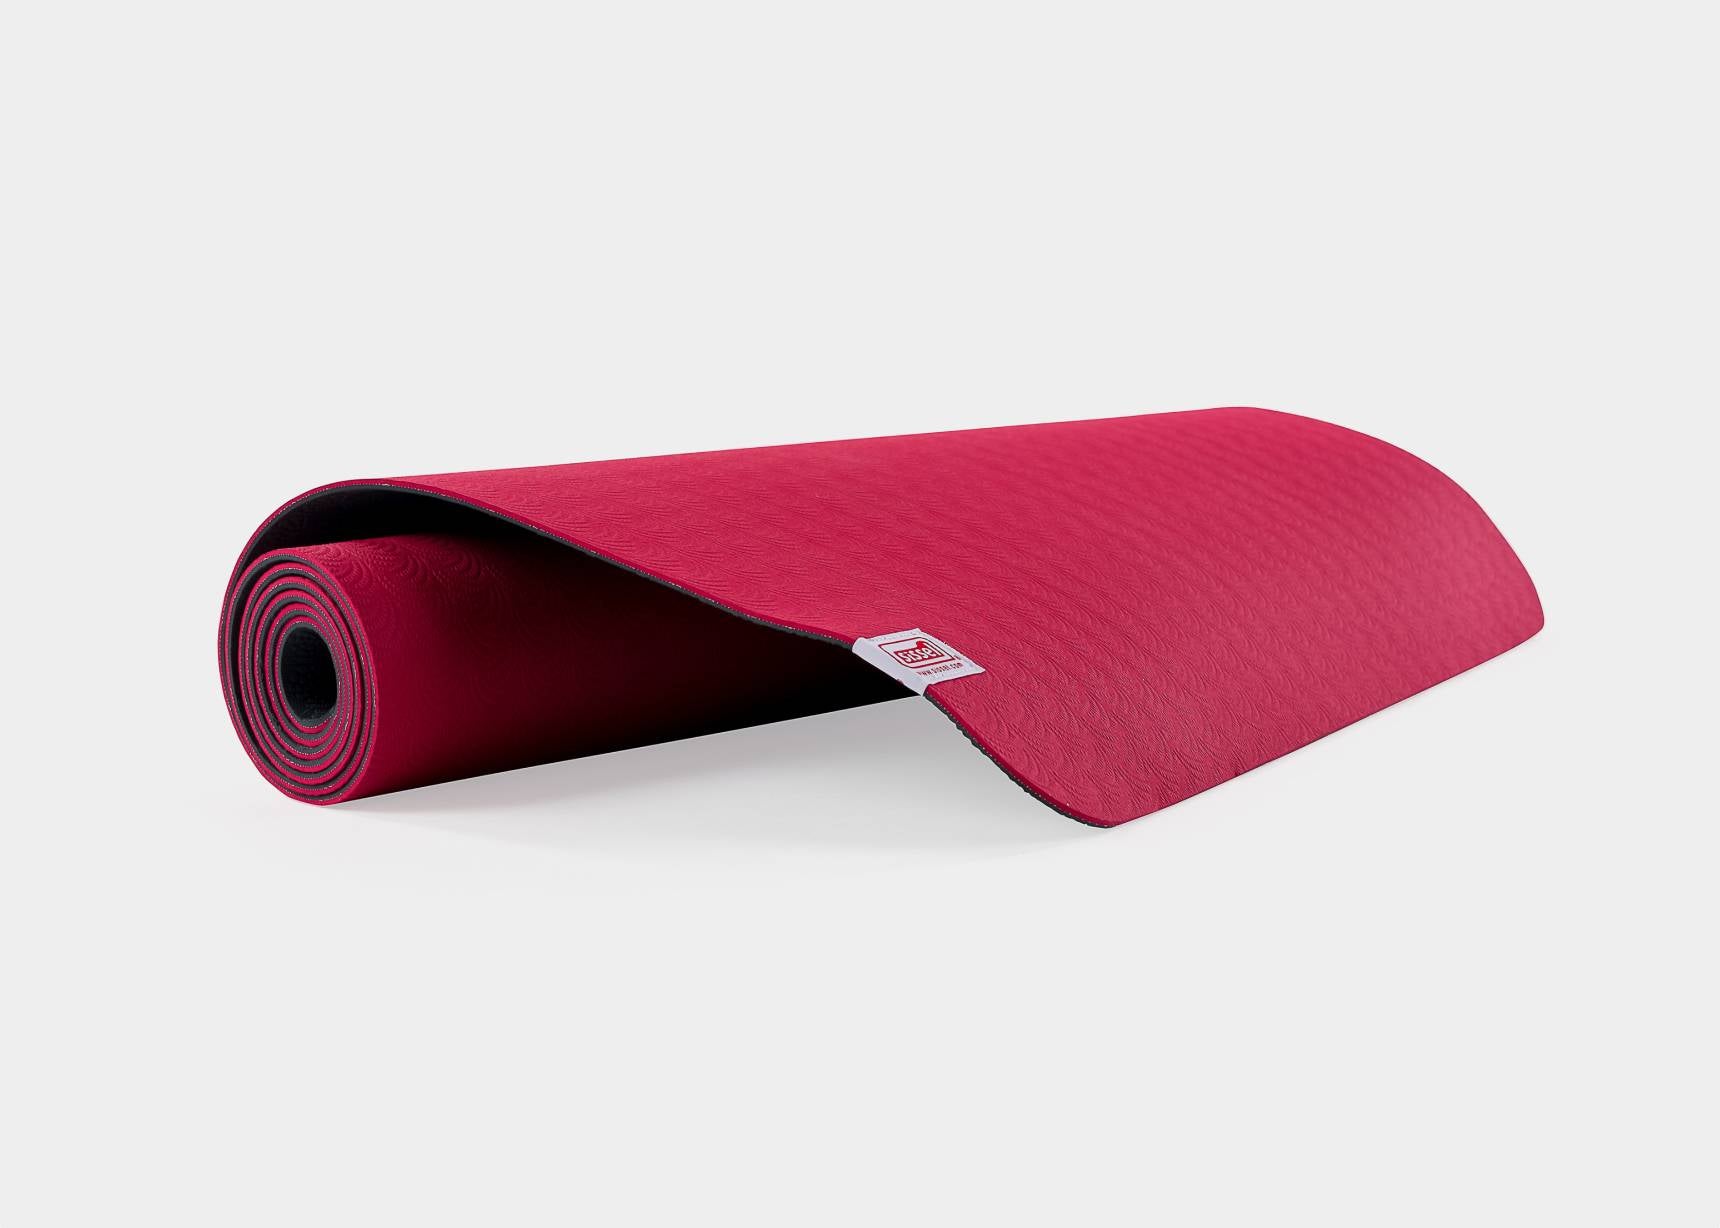 Yoga Mat - Sissel Terra Pilates Mat